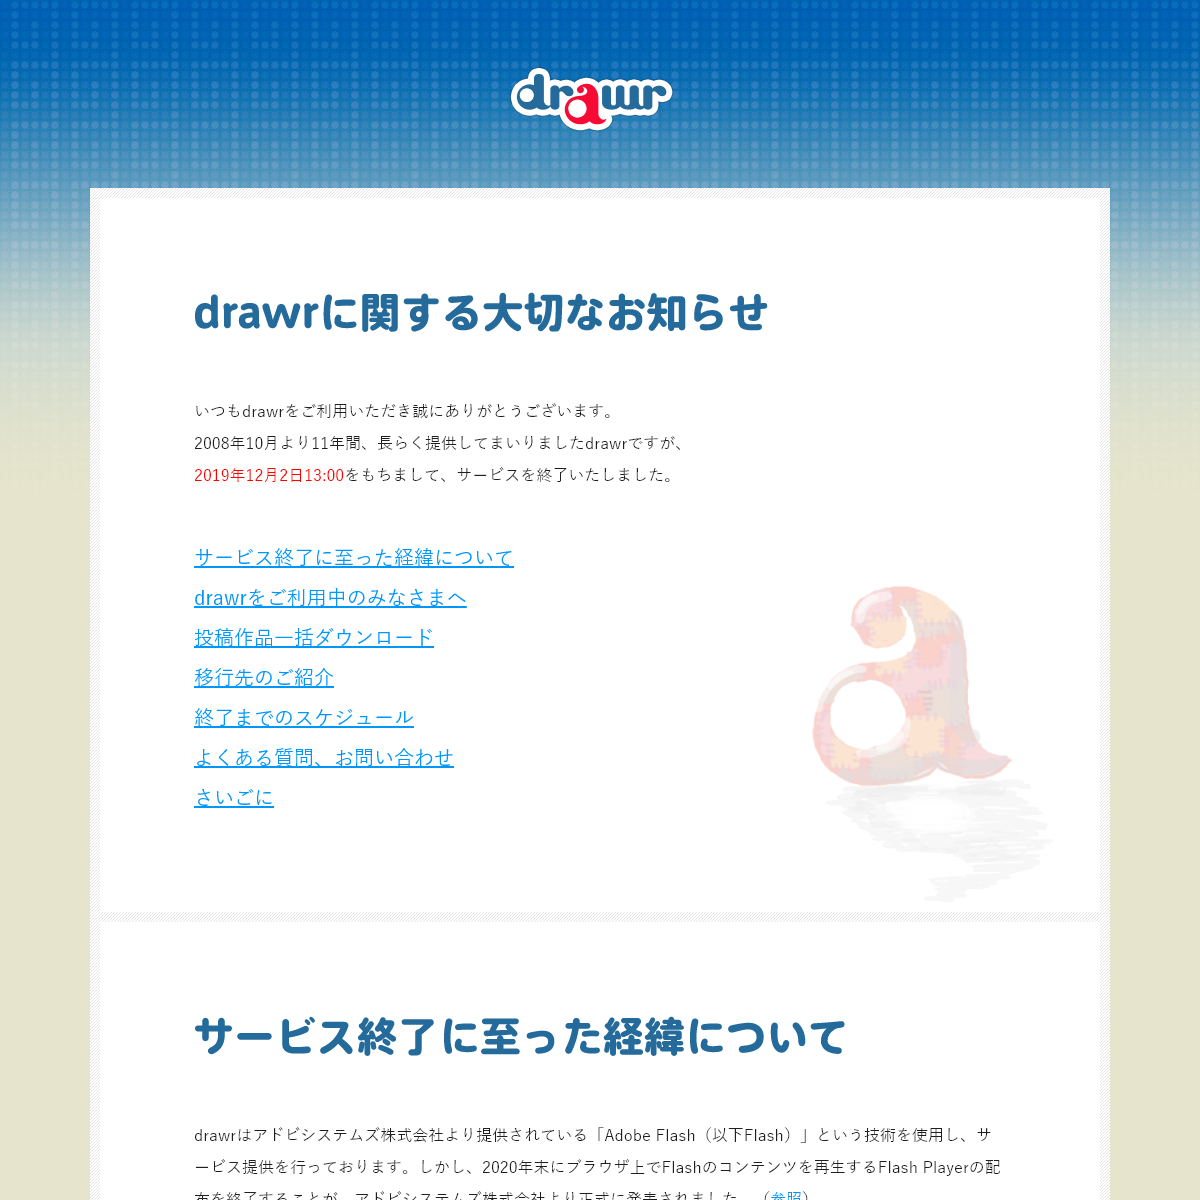 A complete backup of drawr.net